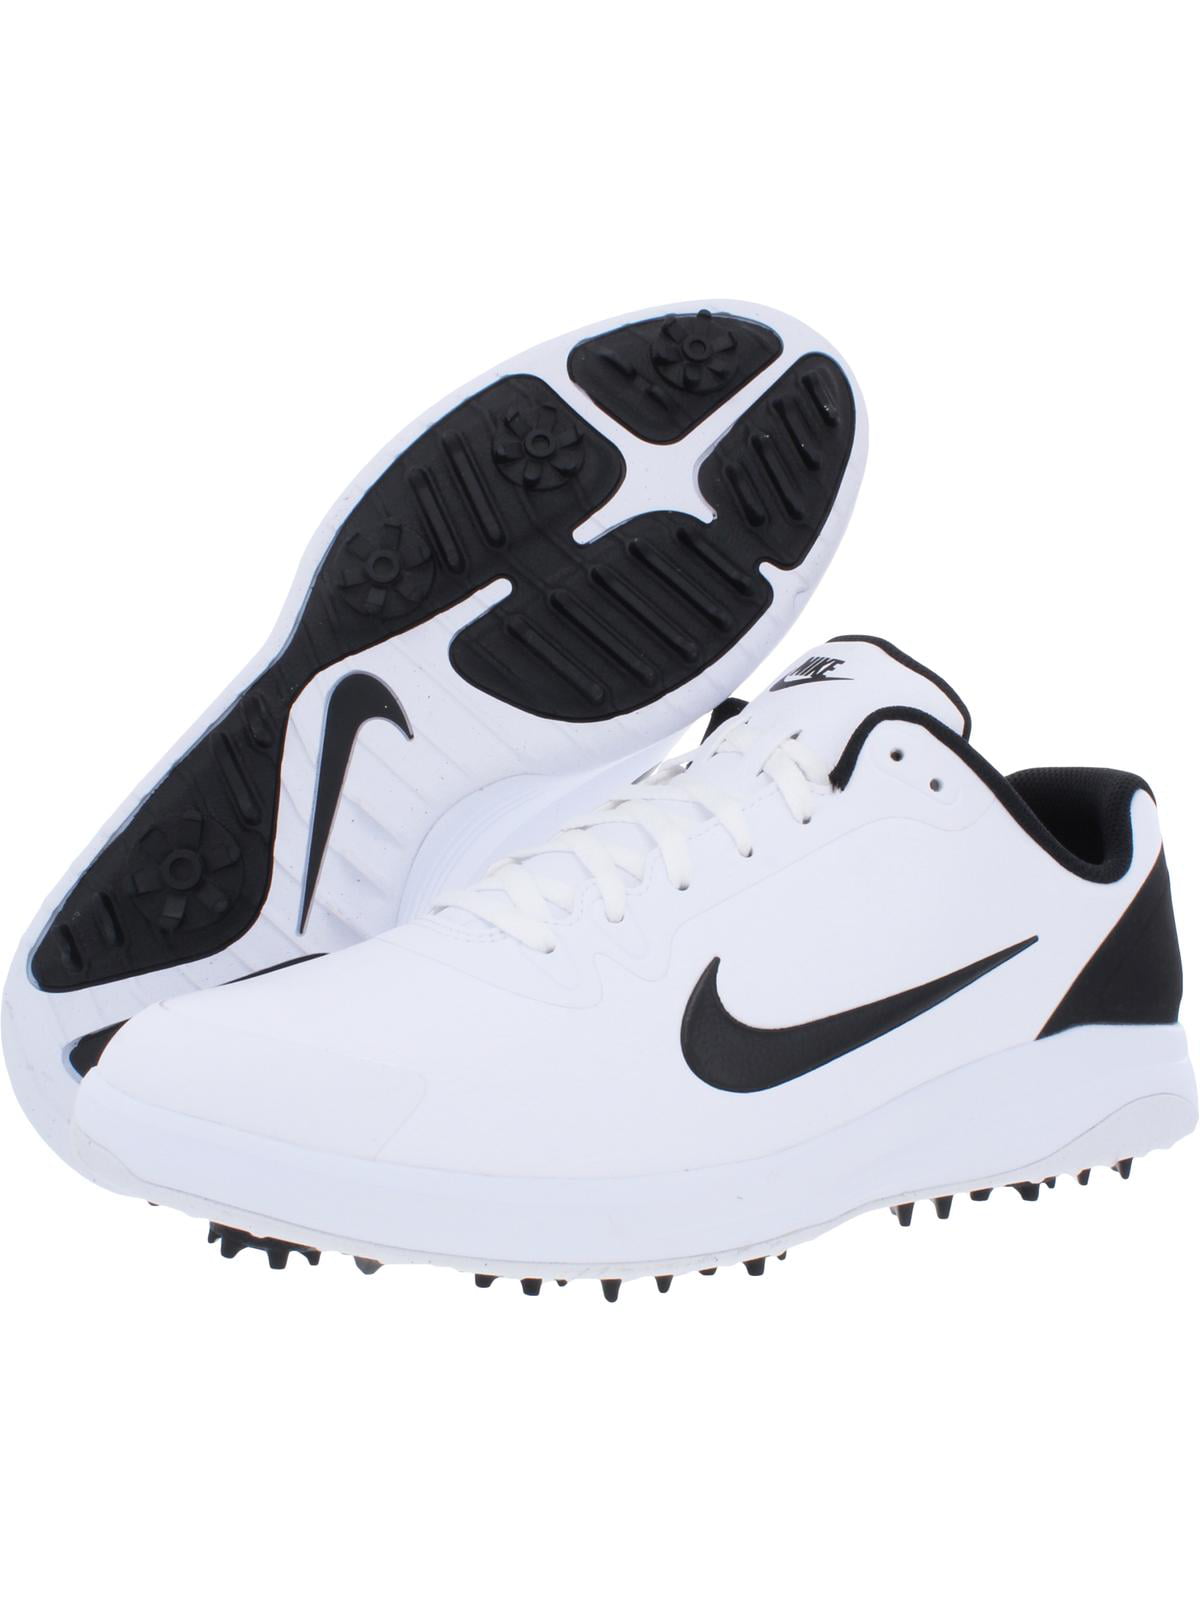 Nike Infinity G Men's Waterproof Spiked Golf Shoes Black-White 